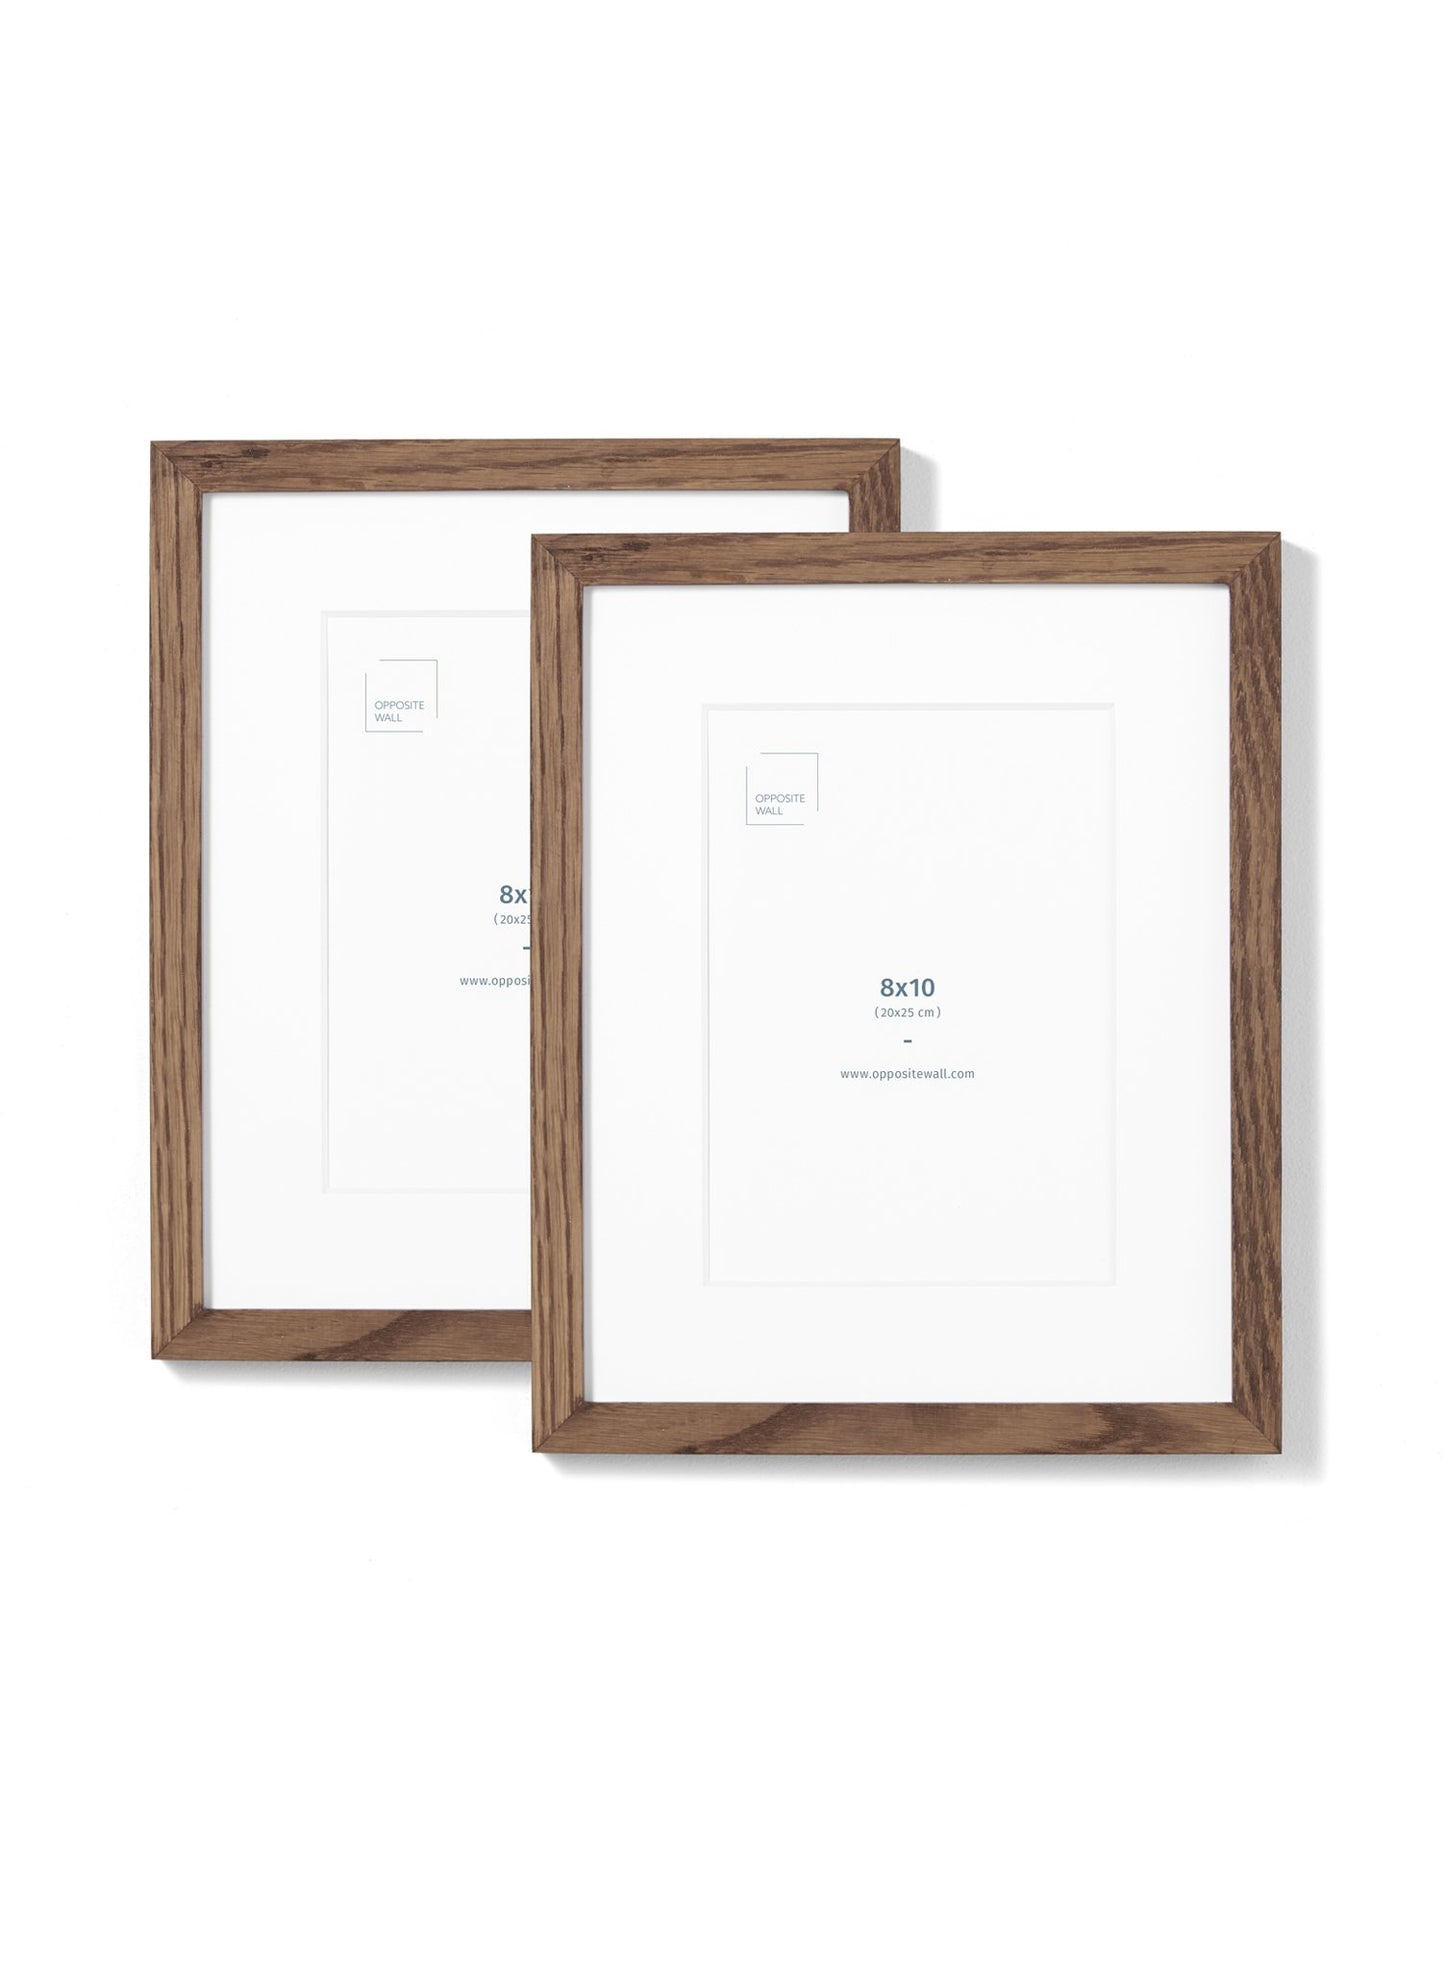 Scandinavian dark oak frame duo by Opposite Wall - Front of the frame - Size 8x10